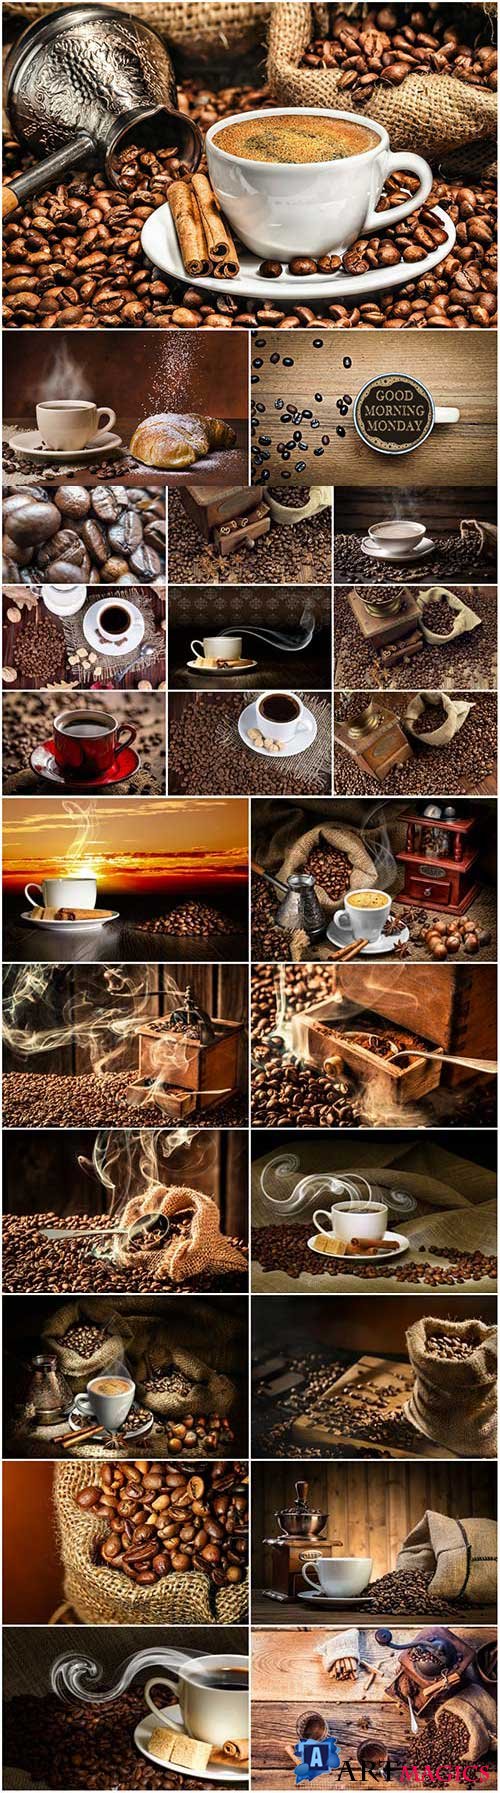 Coffee, turk with coffee, coffee beans set stock photo